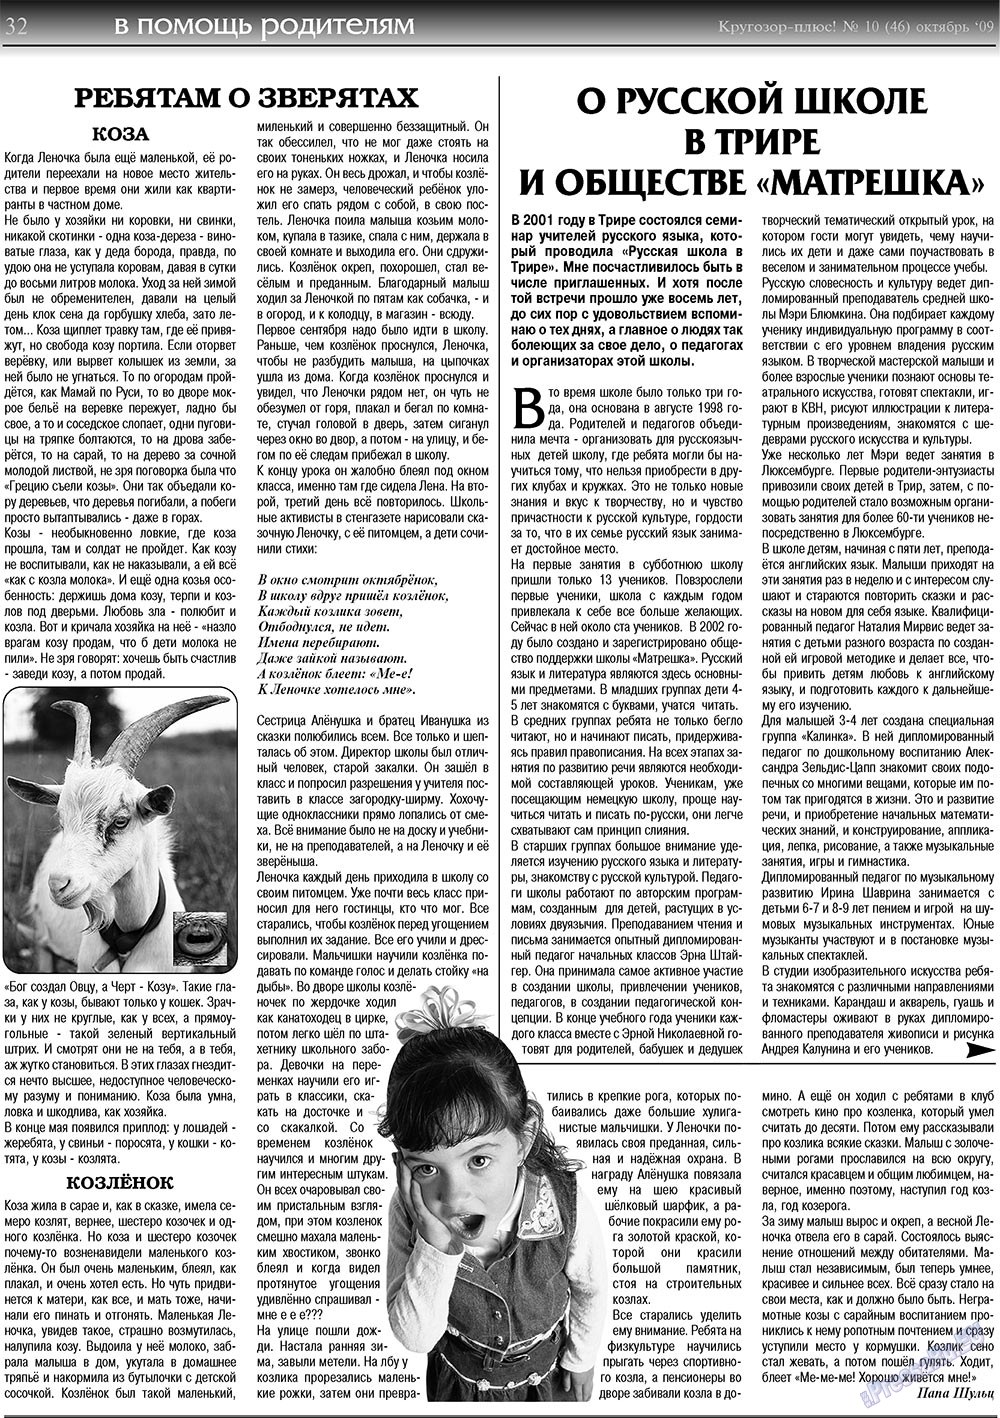 Кругозор плюс! (газета). 2009 год, номер 10, стр. 32